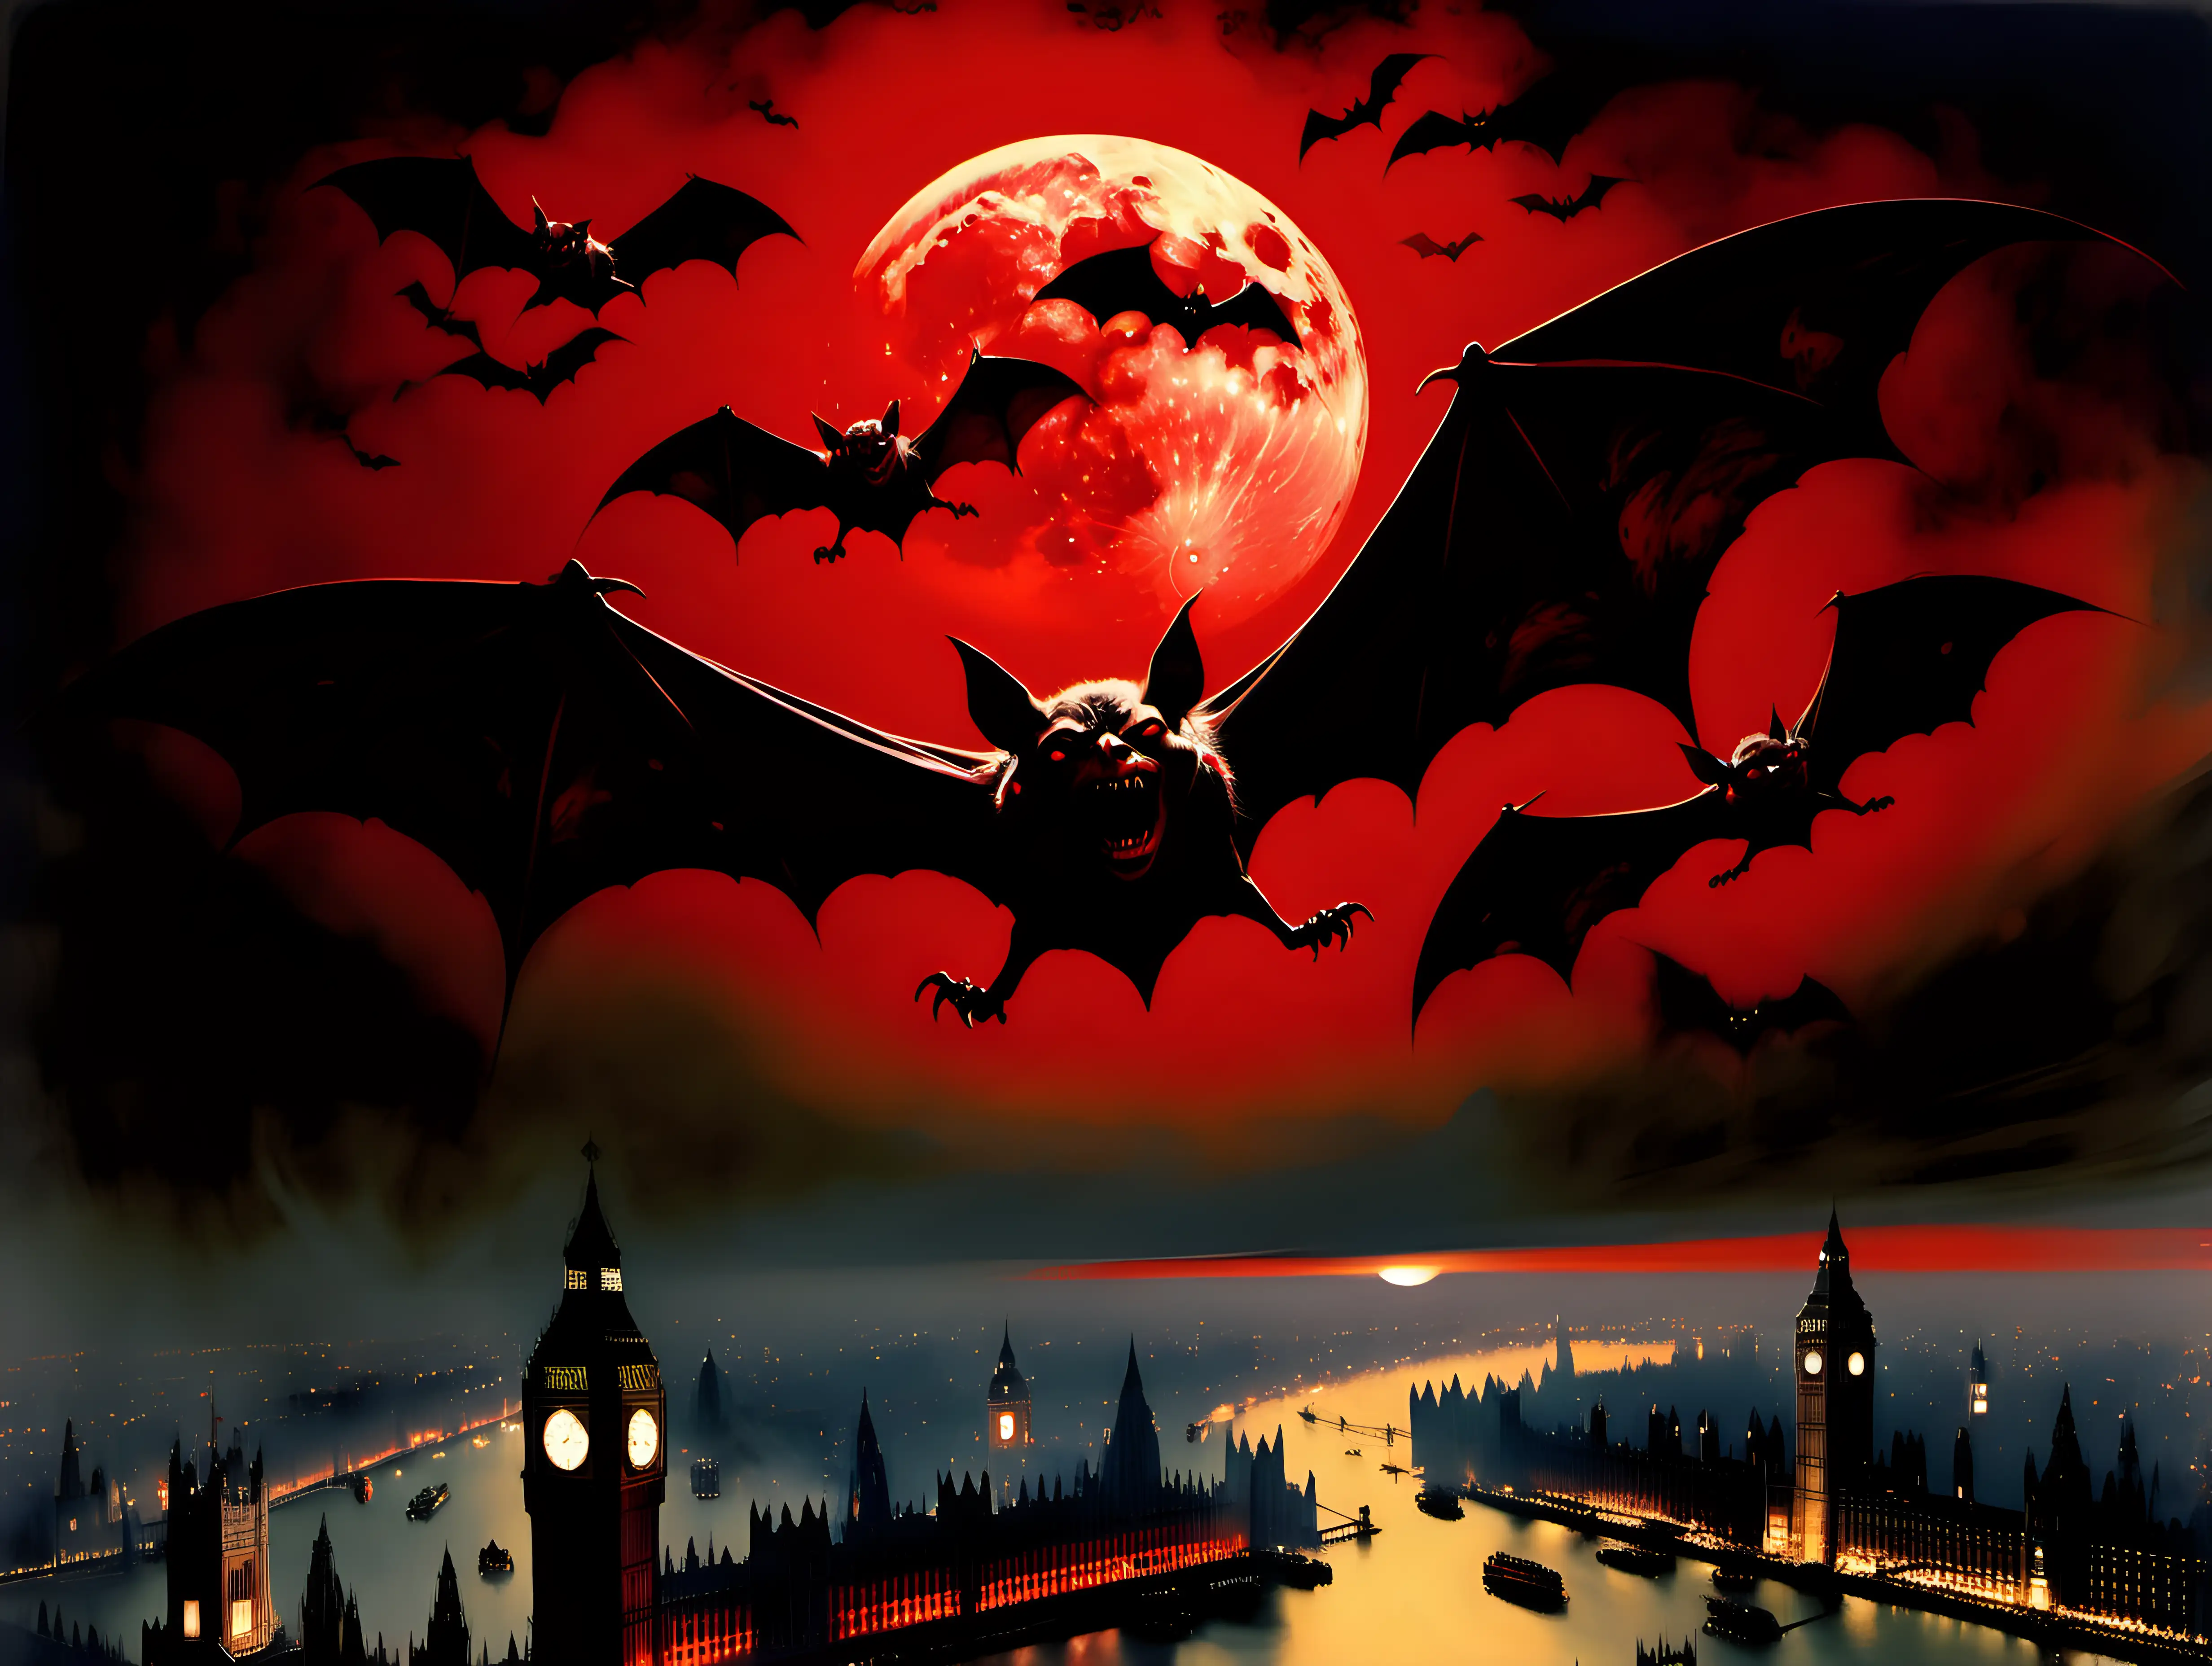 Nocturnal Vampire Bats Soaring Over 1940s London Under a BloodRed Moon Frank Frazetta Inspired